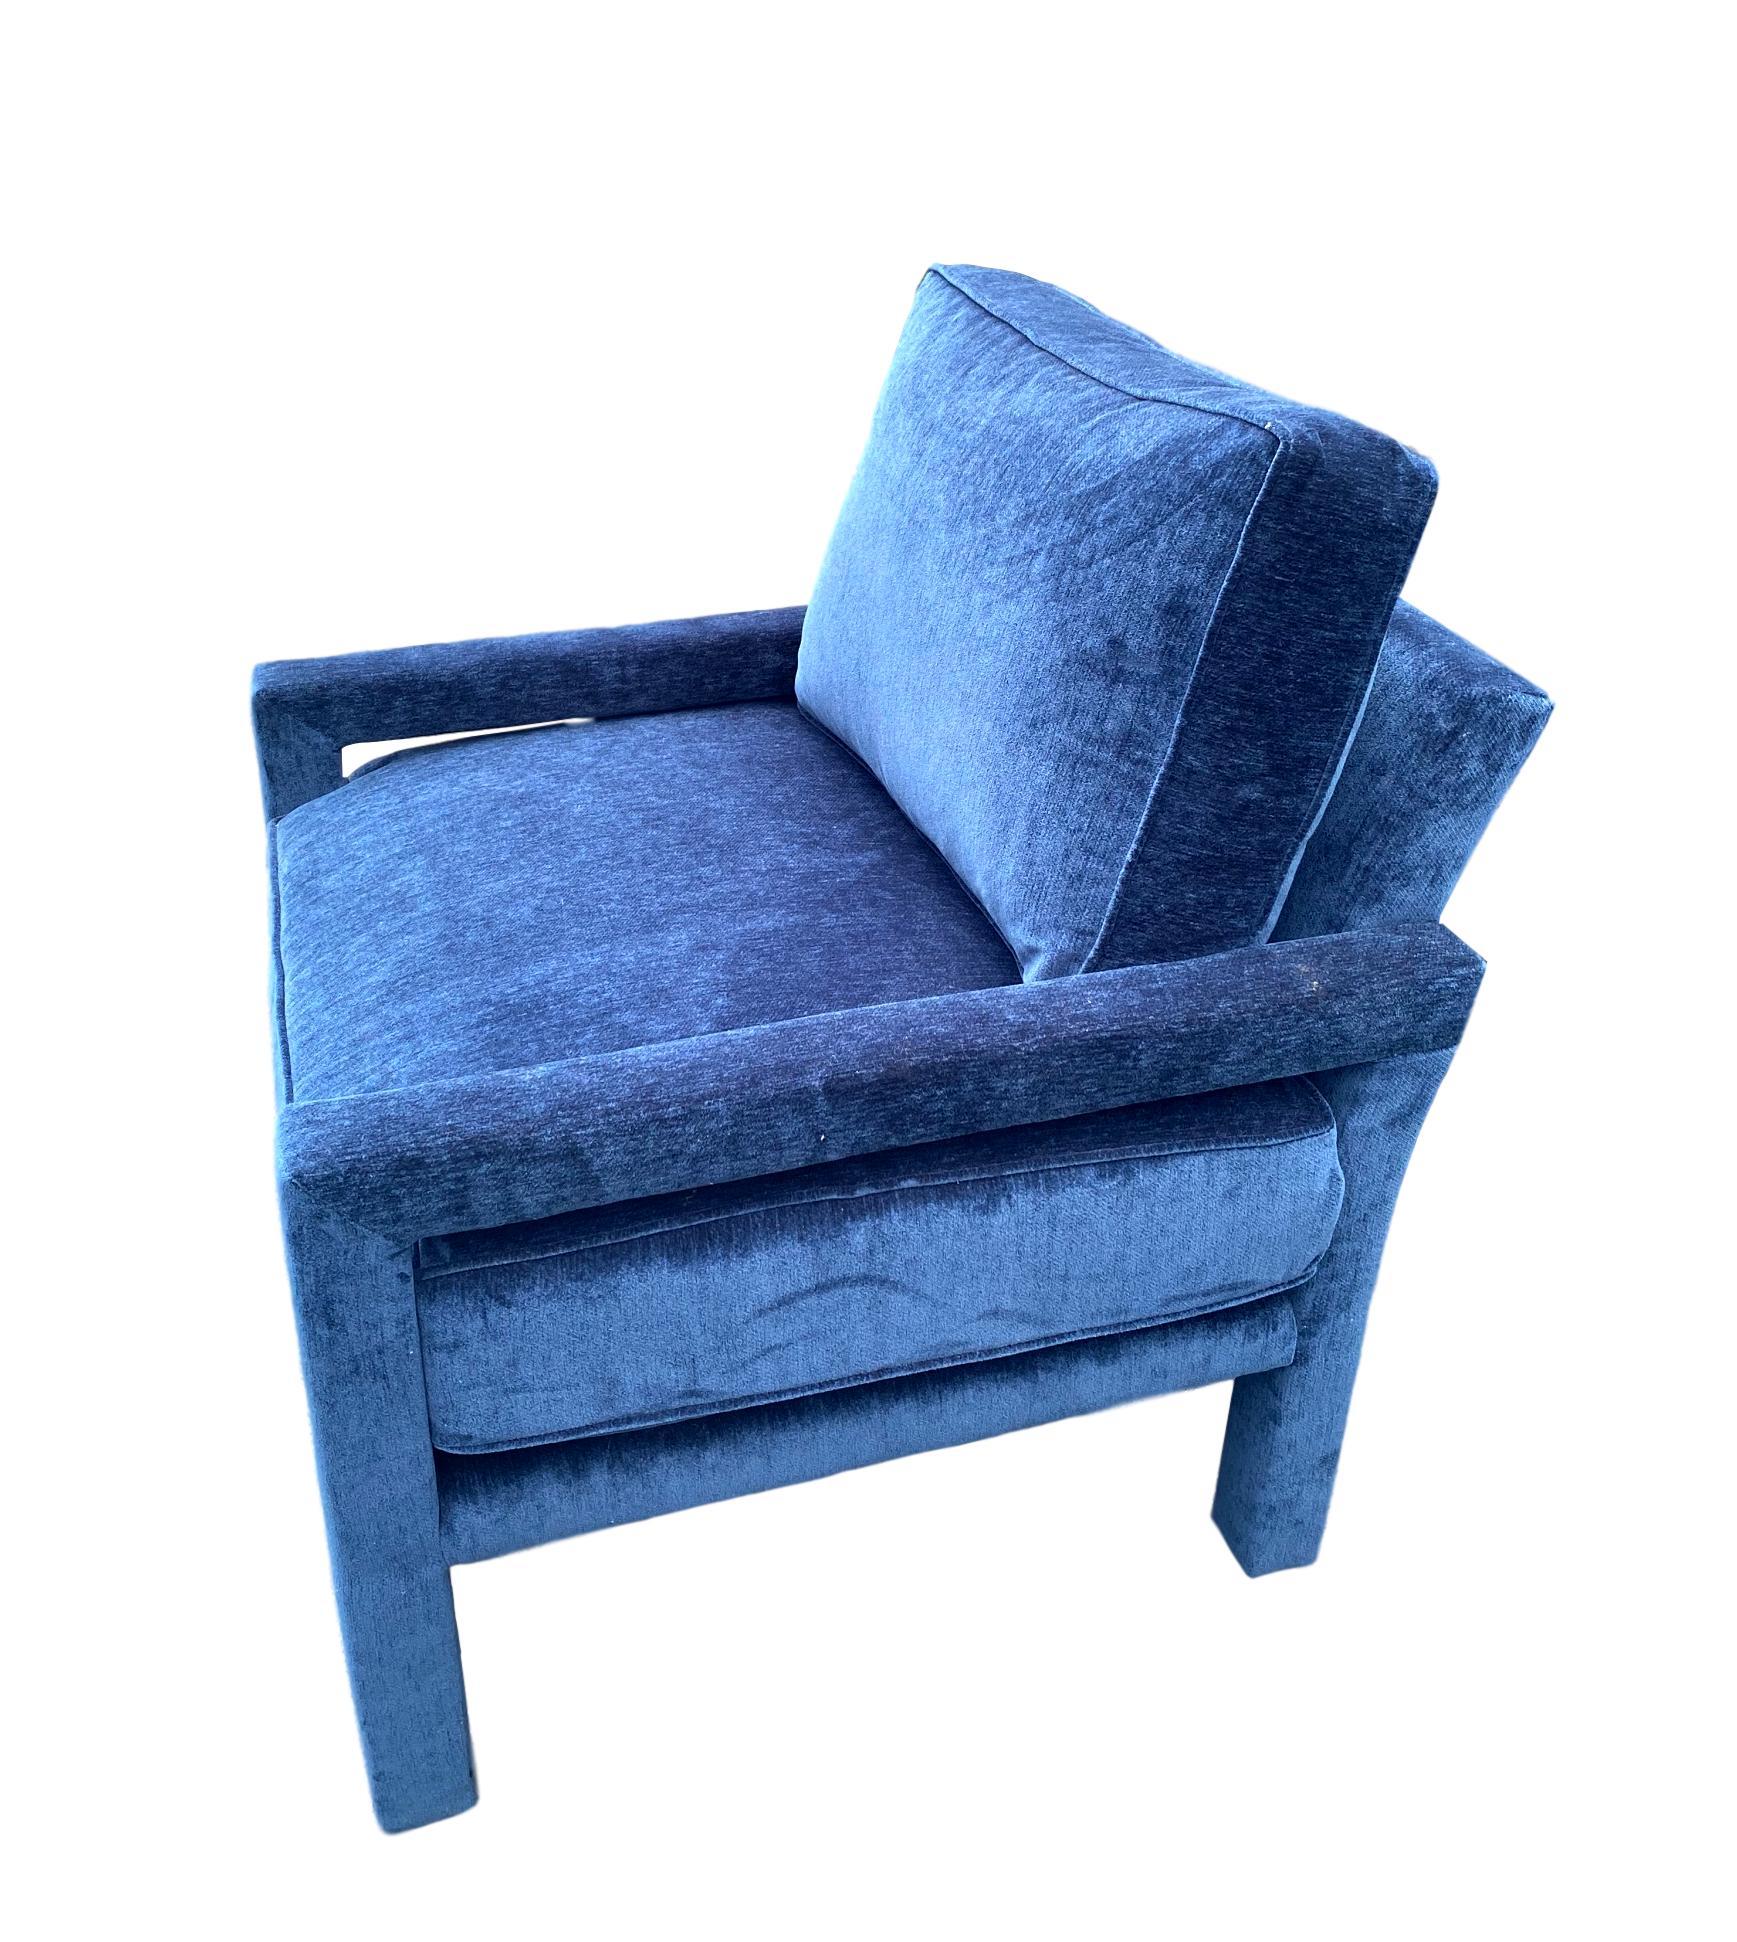 Contemporary Pair of New Milo Baughman Style Iconic Parsons Chairs, Pantone Blue Velvet